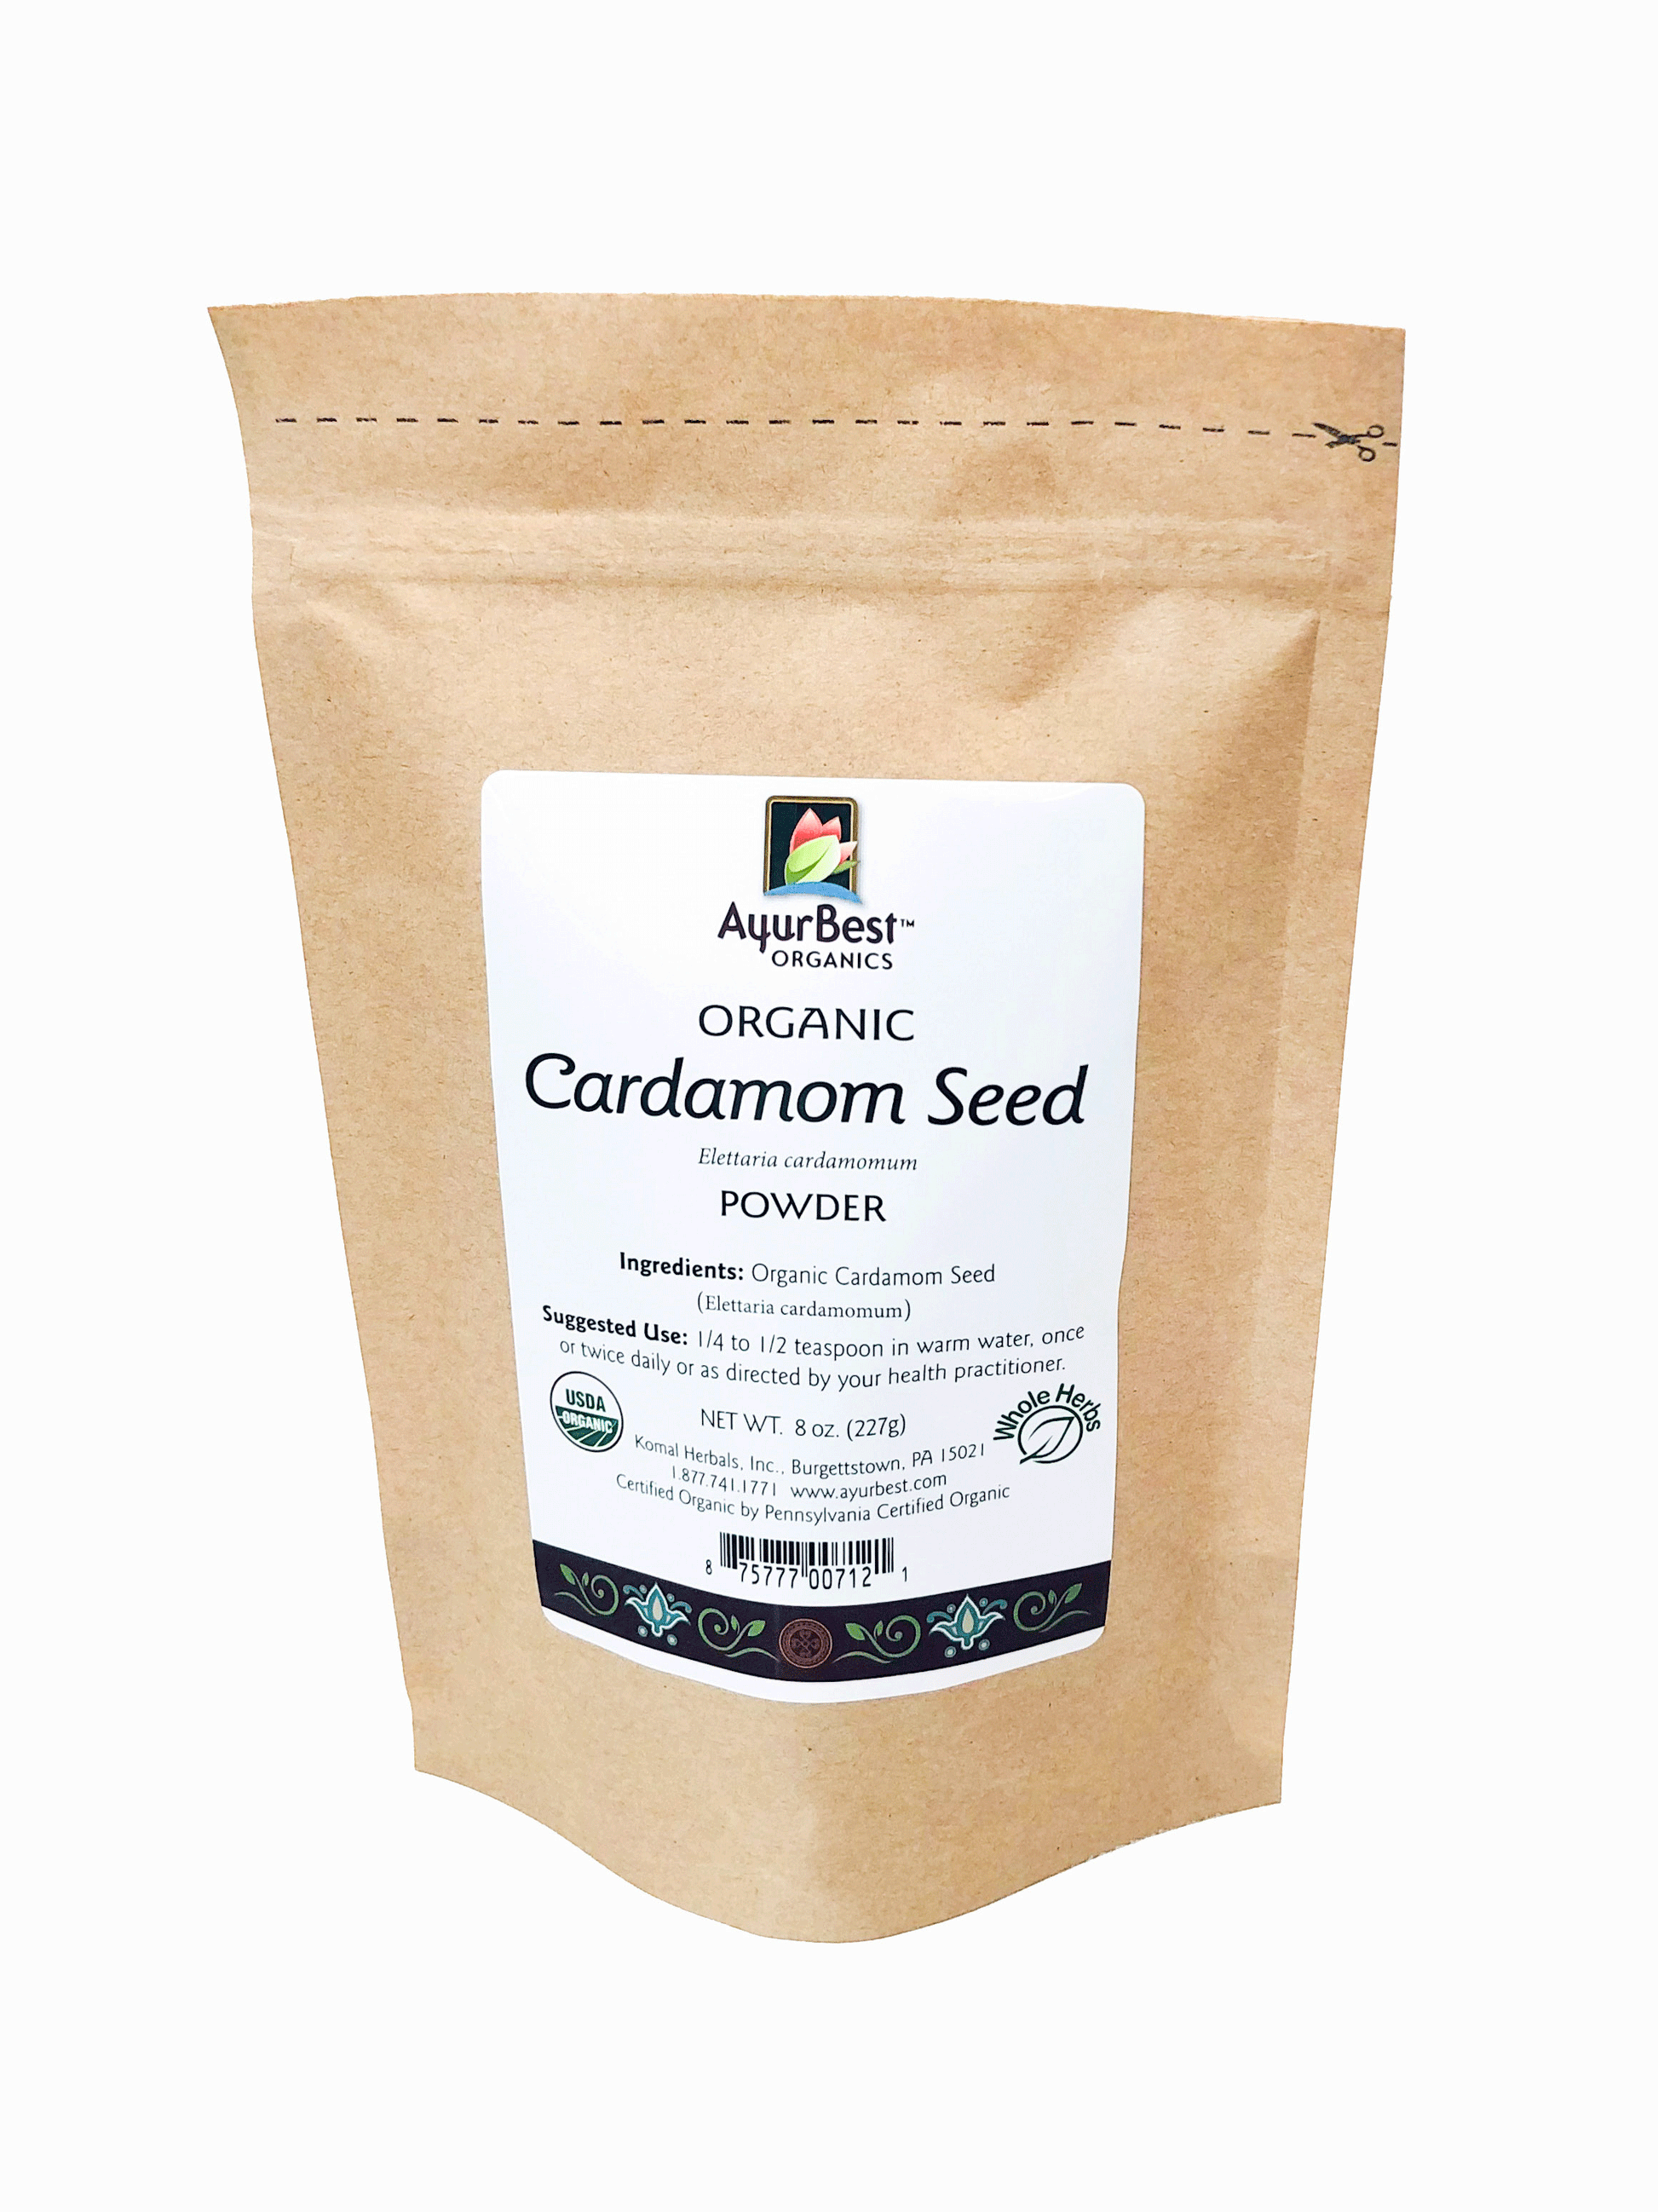 Organic Cardamom Seed Powder 8oz bag, get yours today!